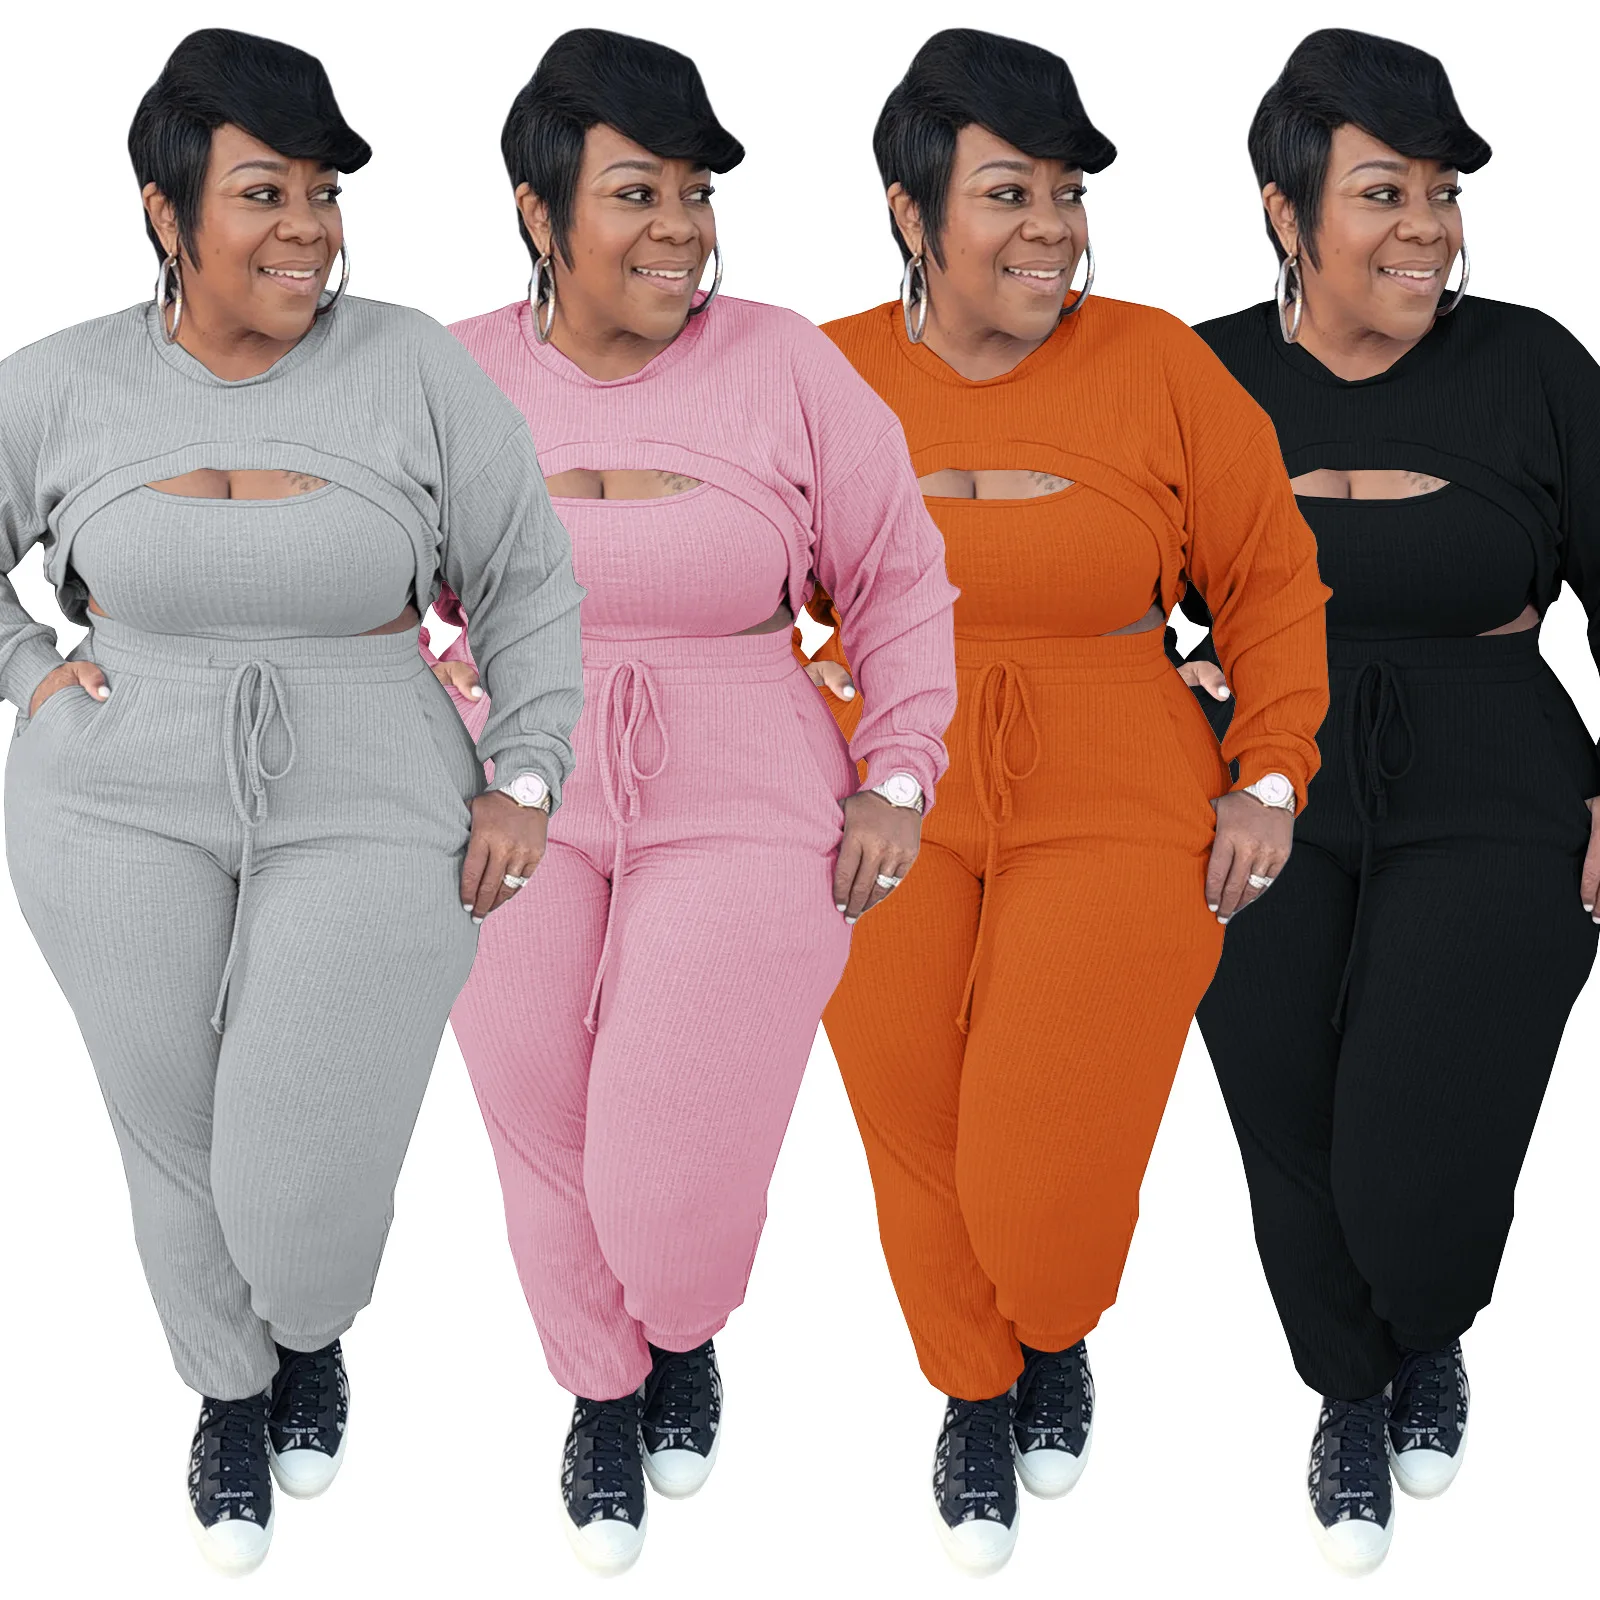 

Women 2021 Plus Size Fall Clothing Solid Rib Custom Joggers 3 Pieces Sports Wear For Ladies Long Sleeve Pants Set, Gray,pink,orange,black